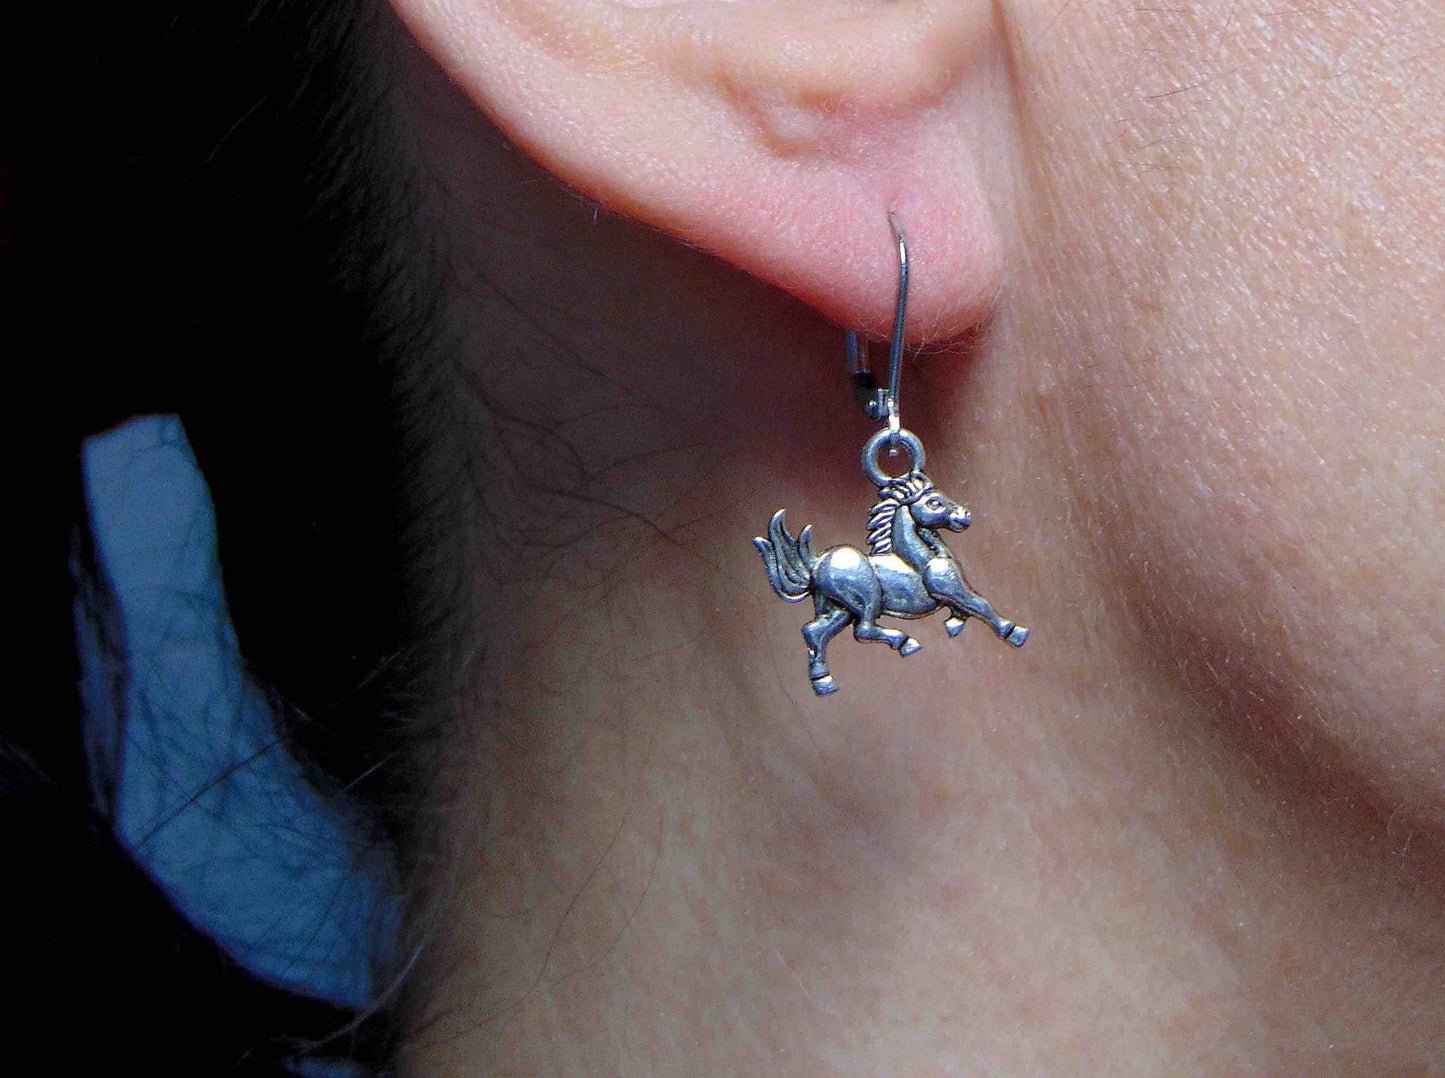 Short earrings with galloping horses, stainless steel lever back hooks